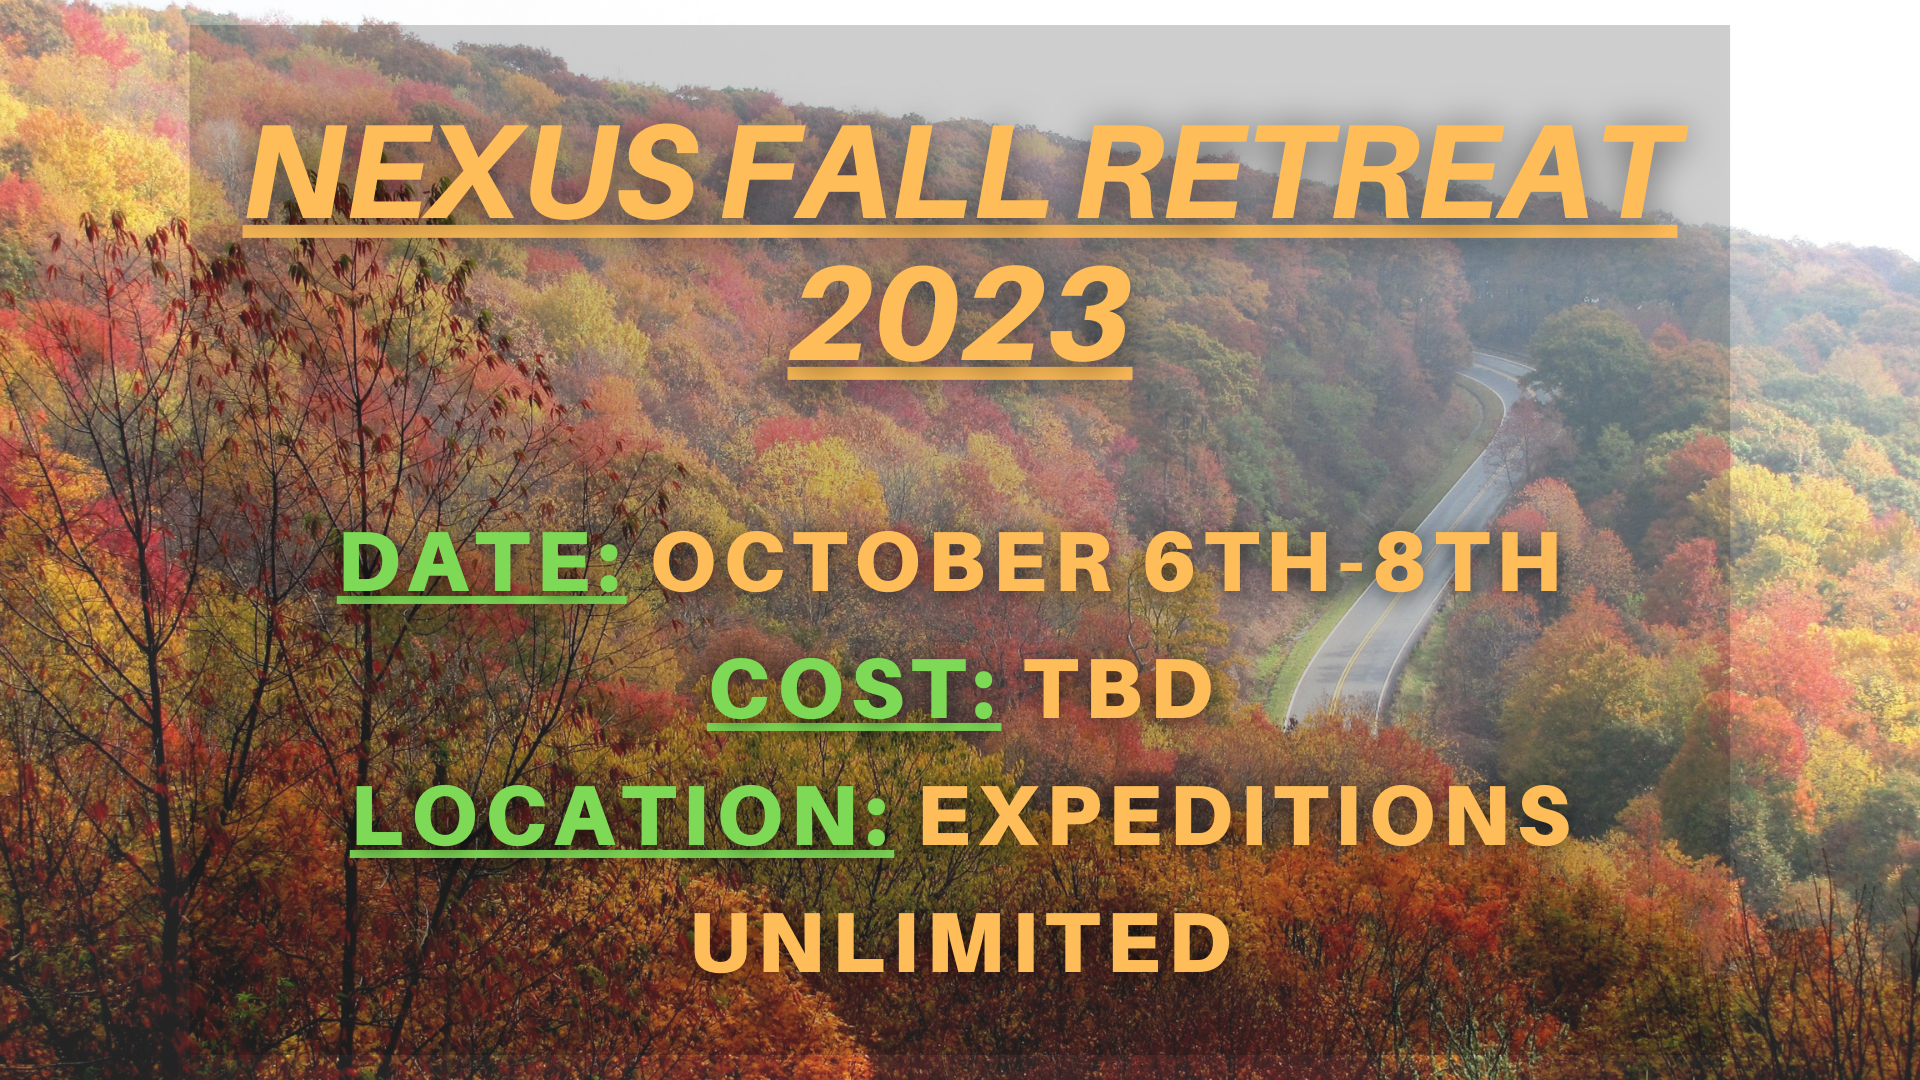 Fall Retreat 2023